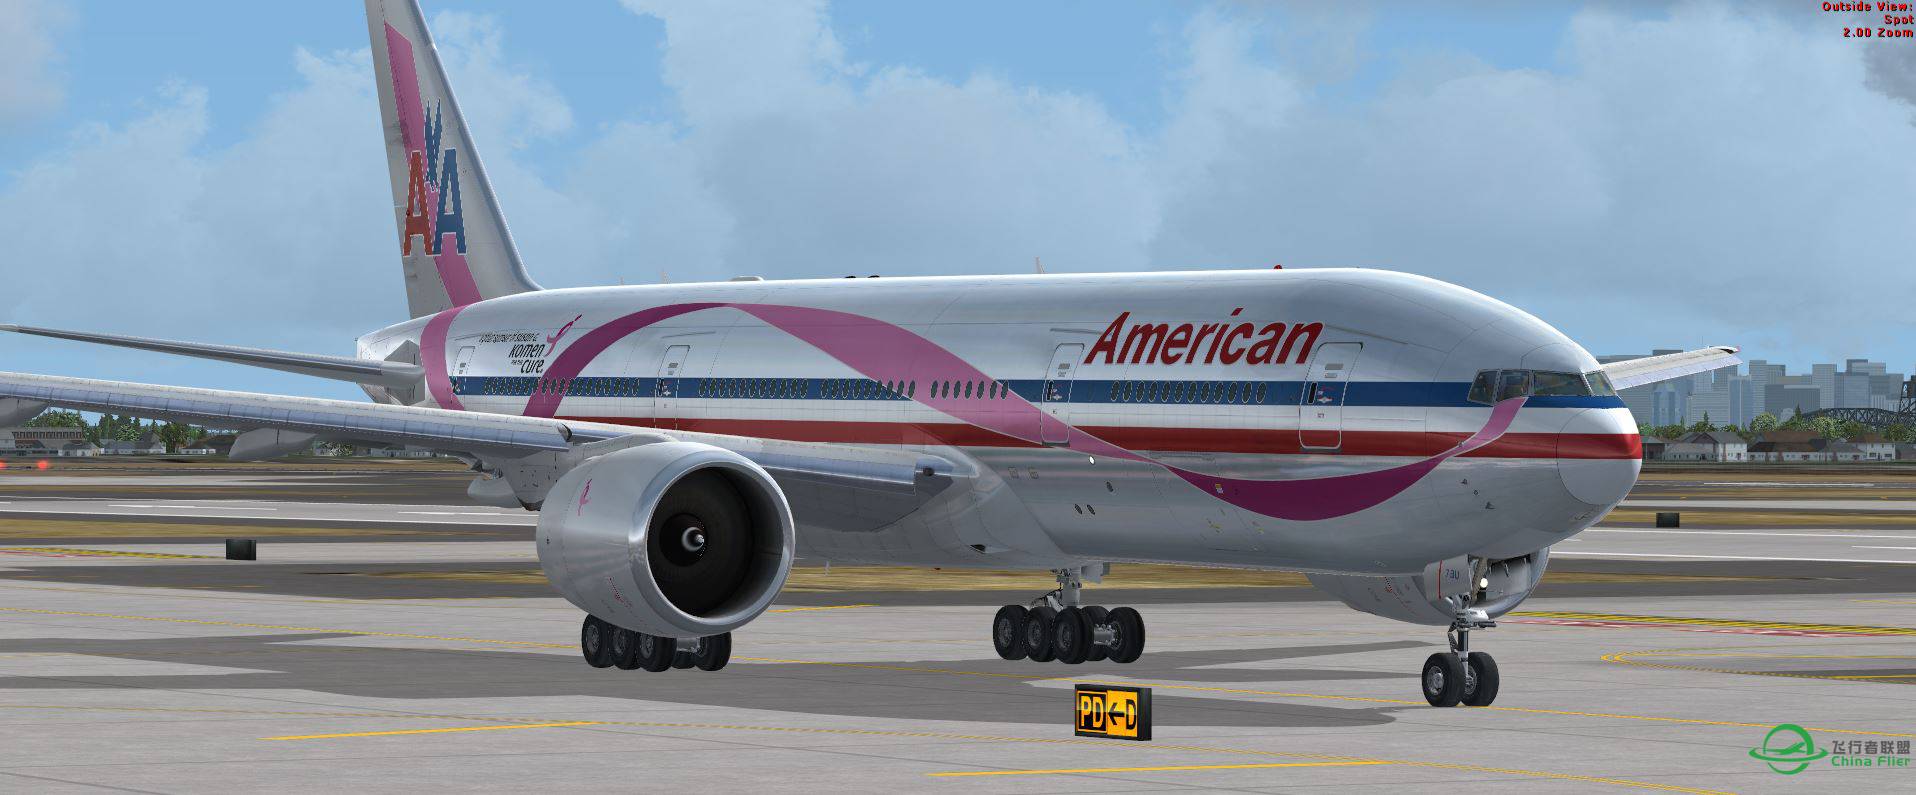 B777 American Airline-9656 